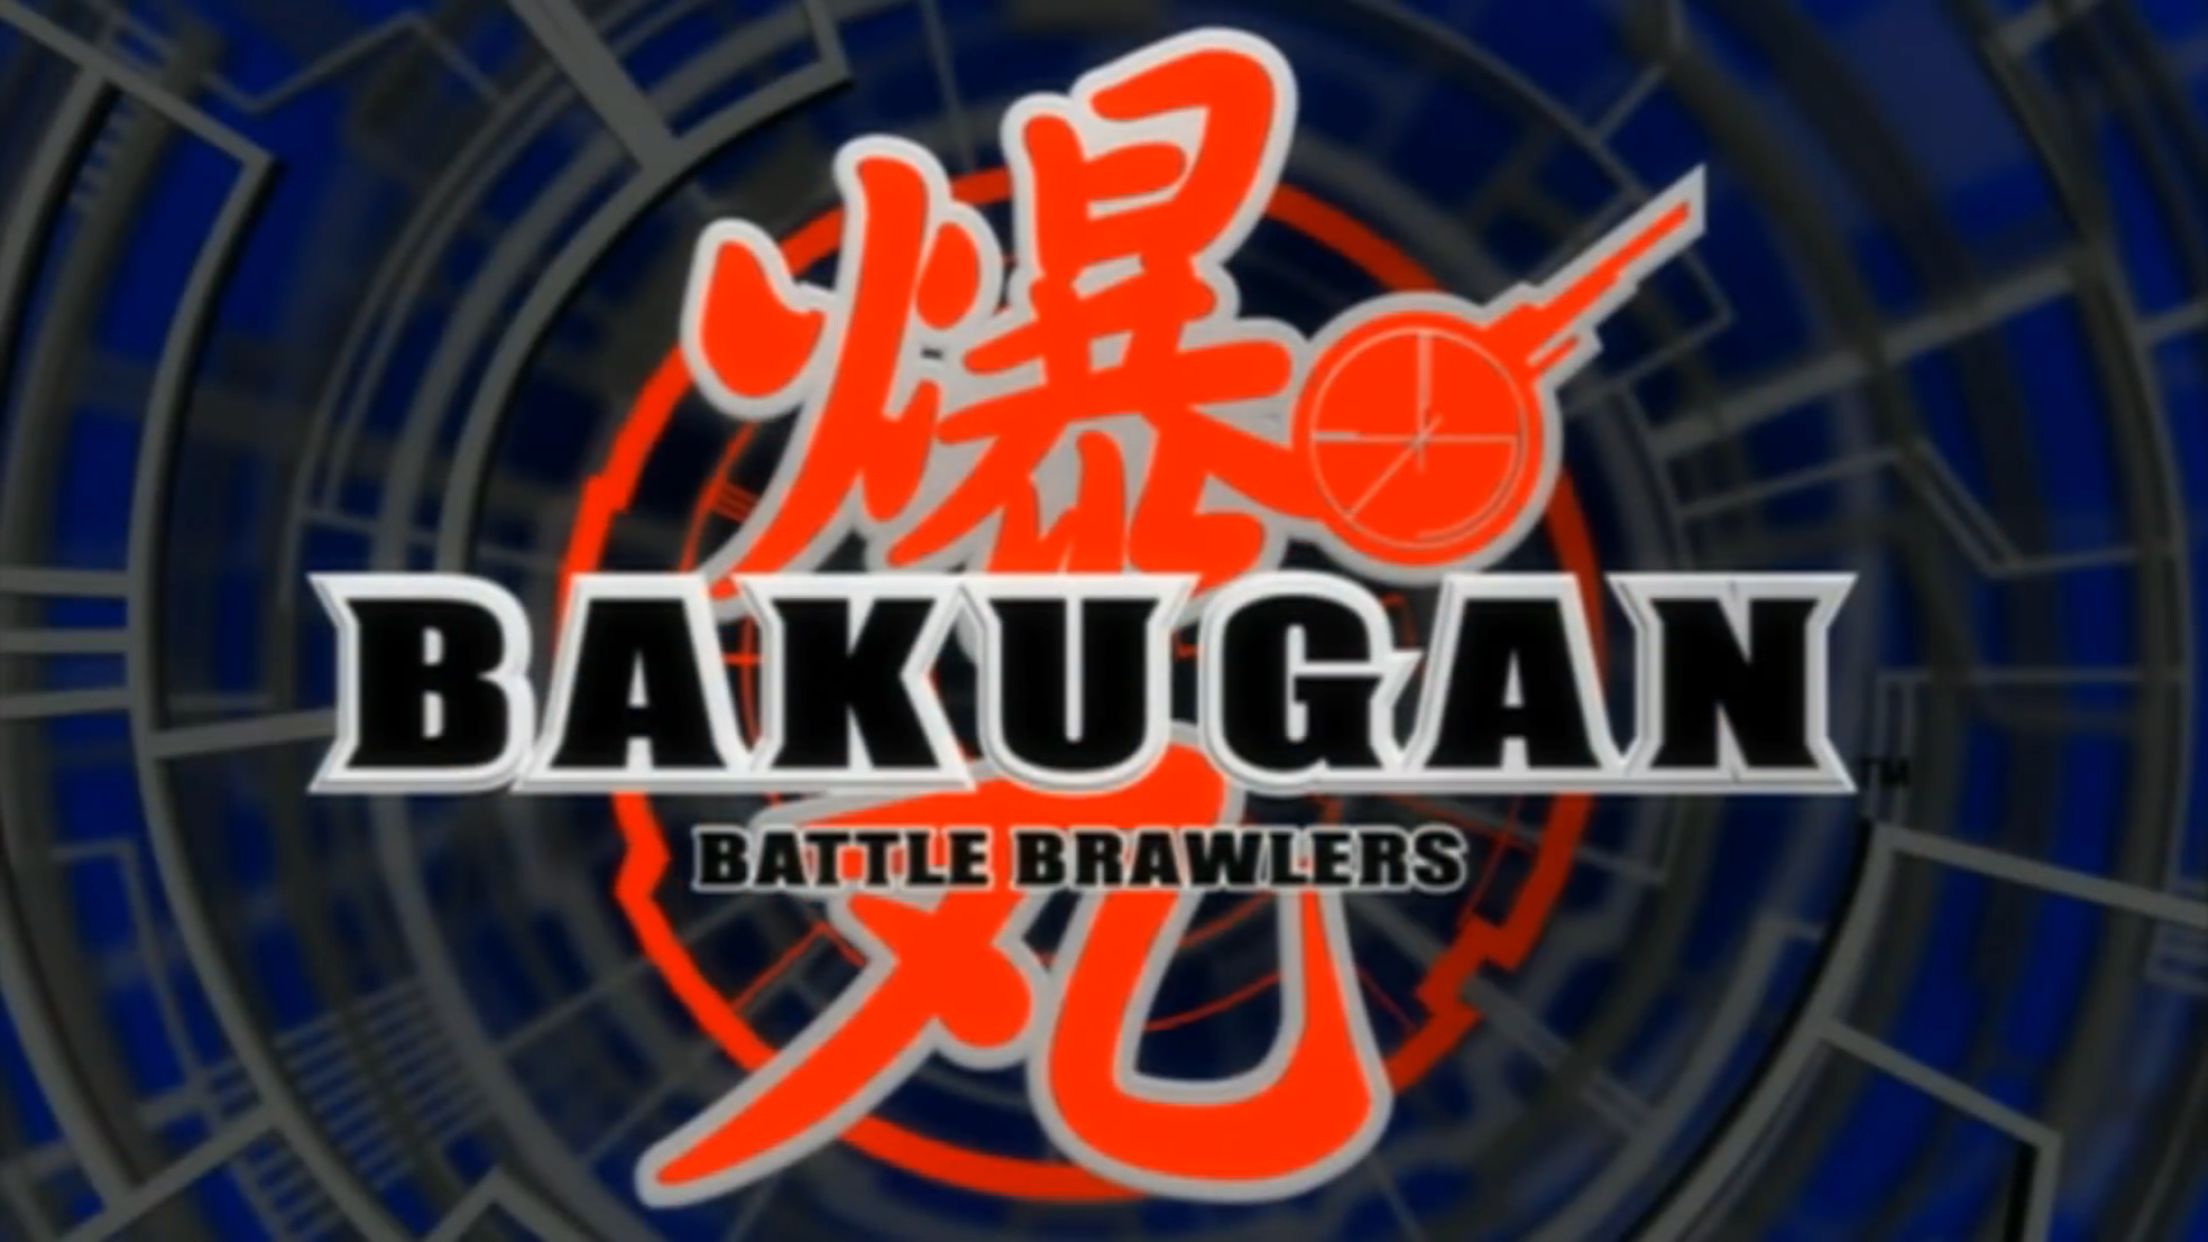 Bakugan: Legends debuts on Cartoon Network, Télétoon, YTV this April